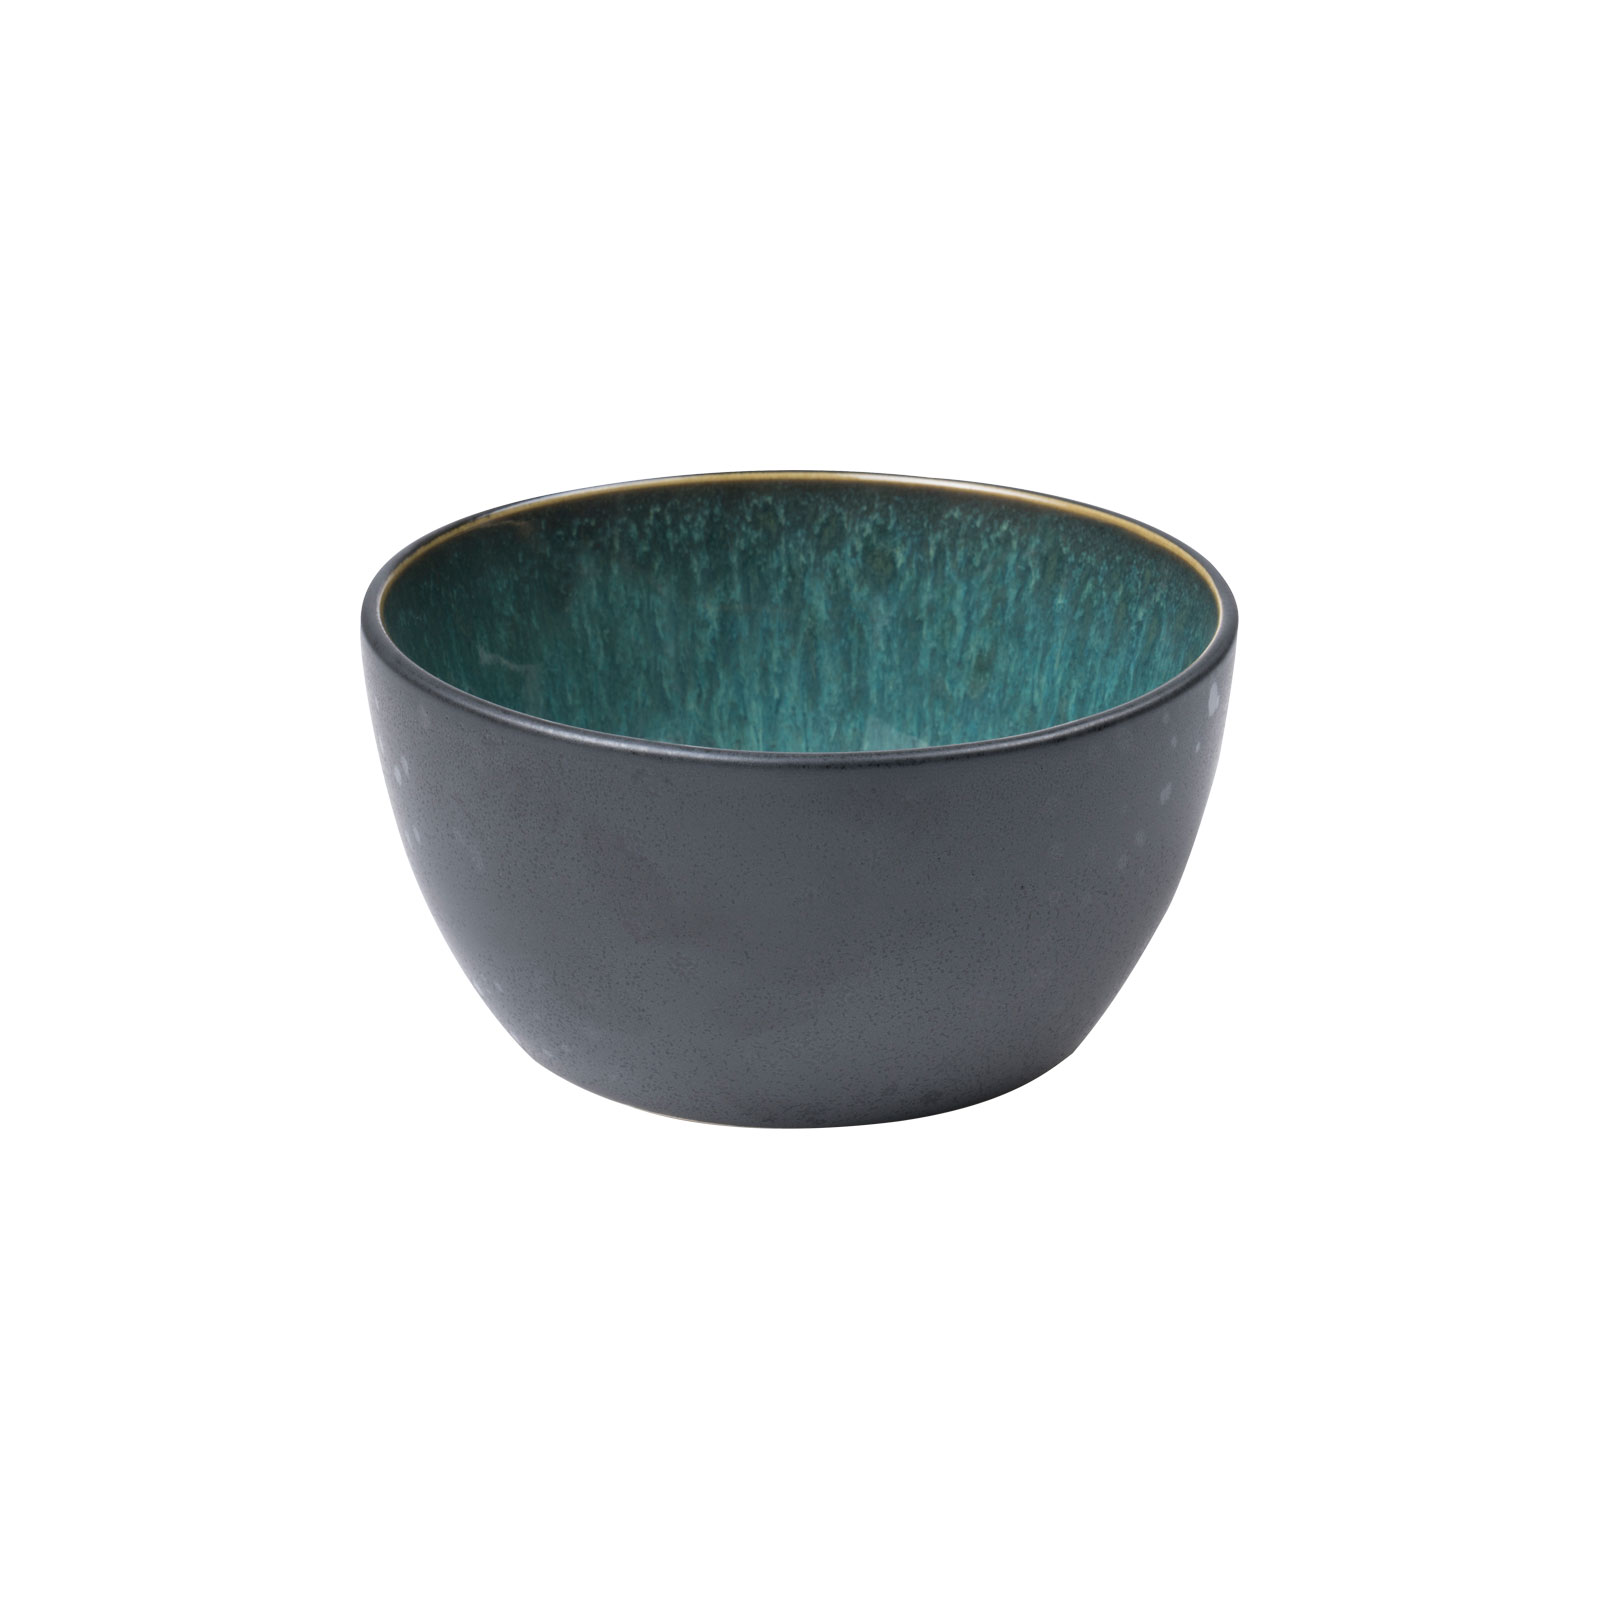 Bitz Bowl 14cm black/green Keramik